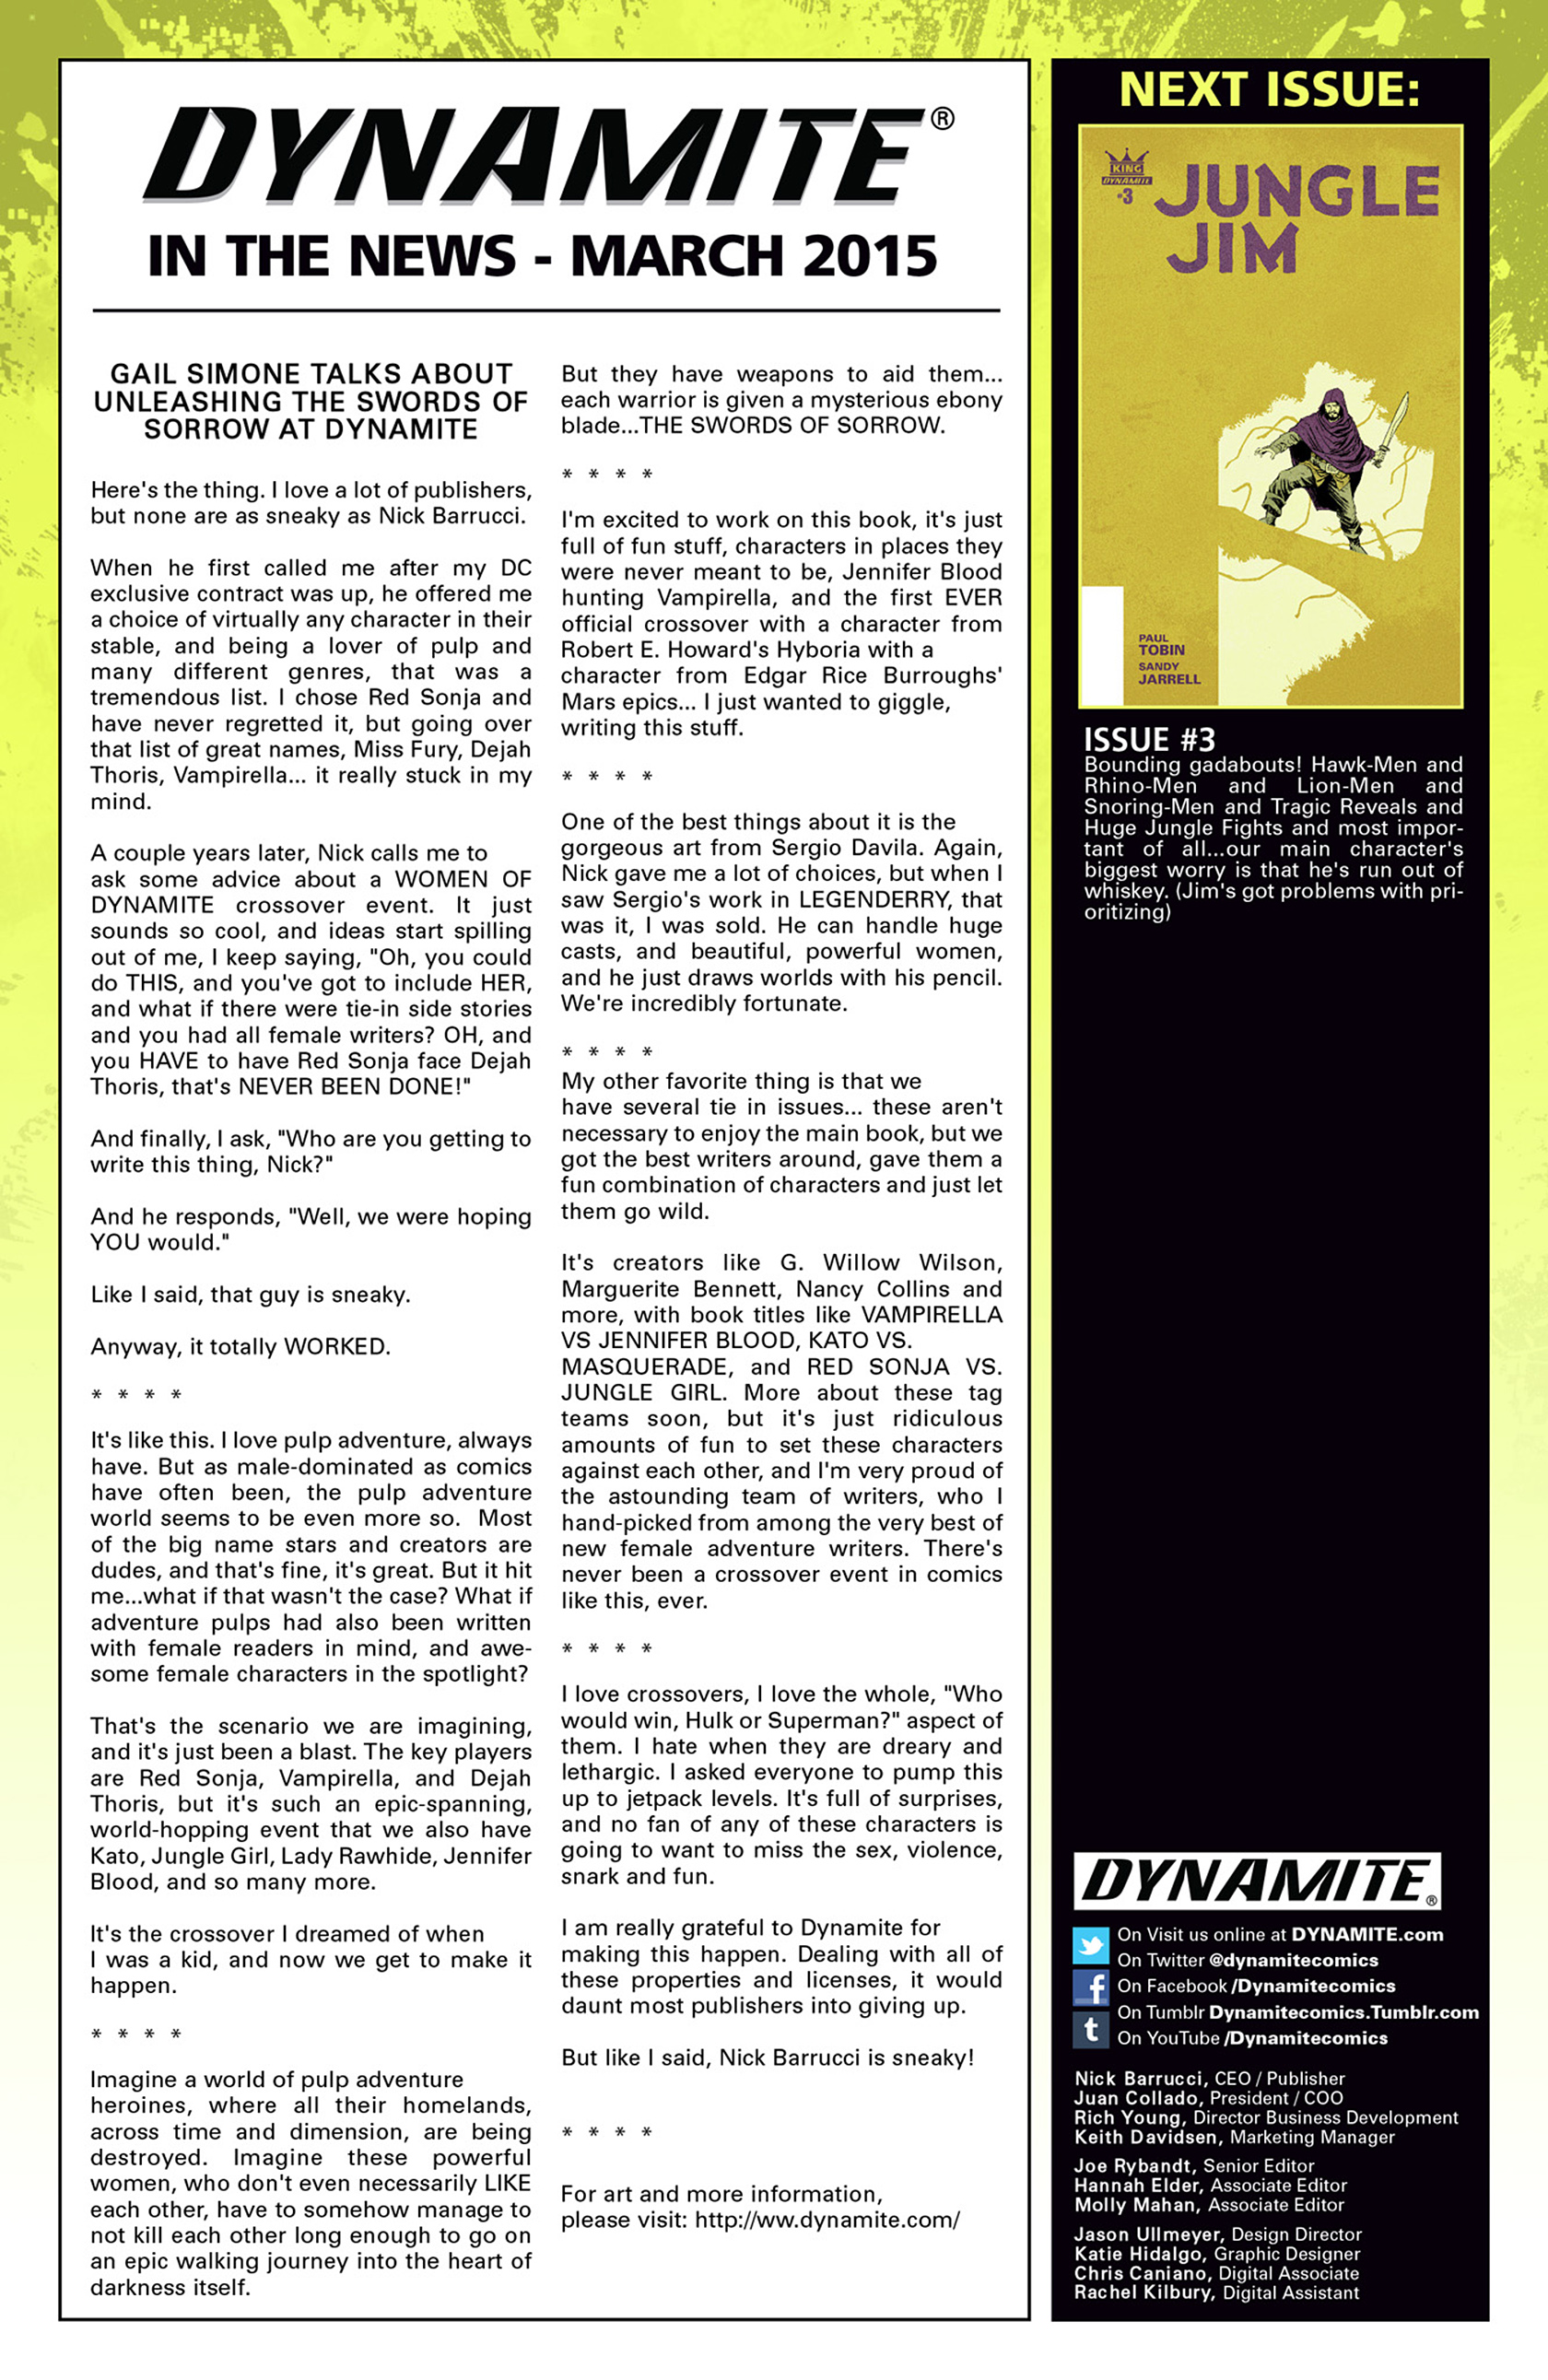 Read online King: Jungle Jim comic -  Issue #2 - 25